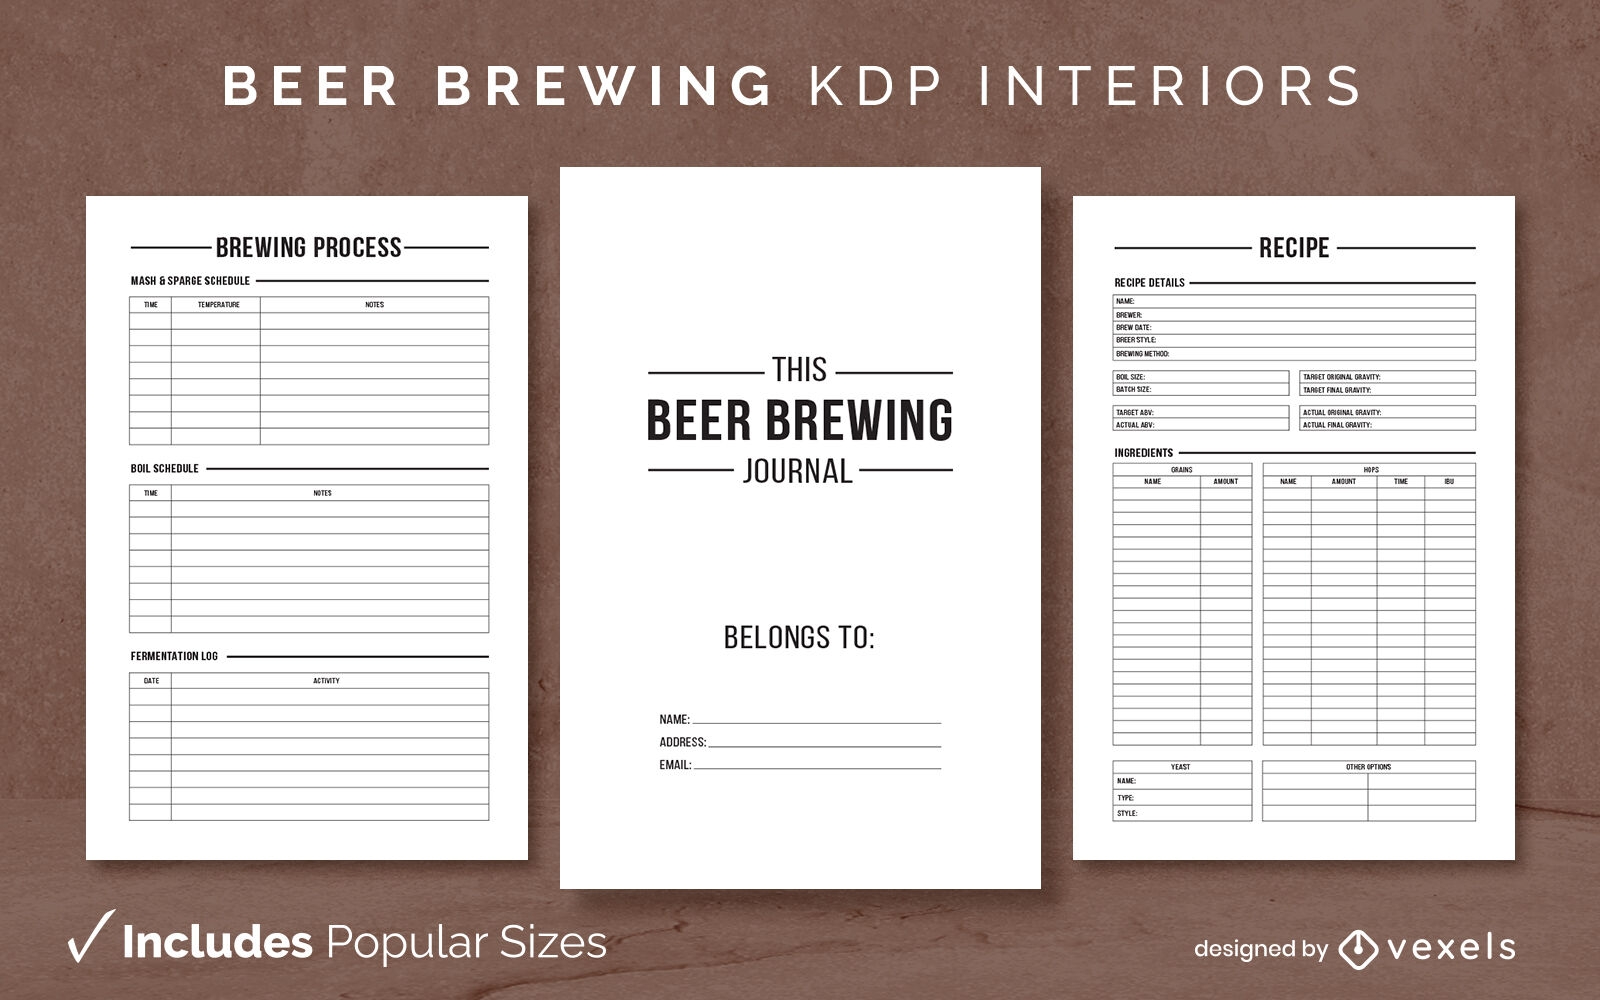 Simple beer brewing journal design template KDP